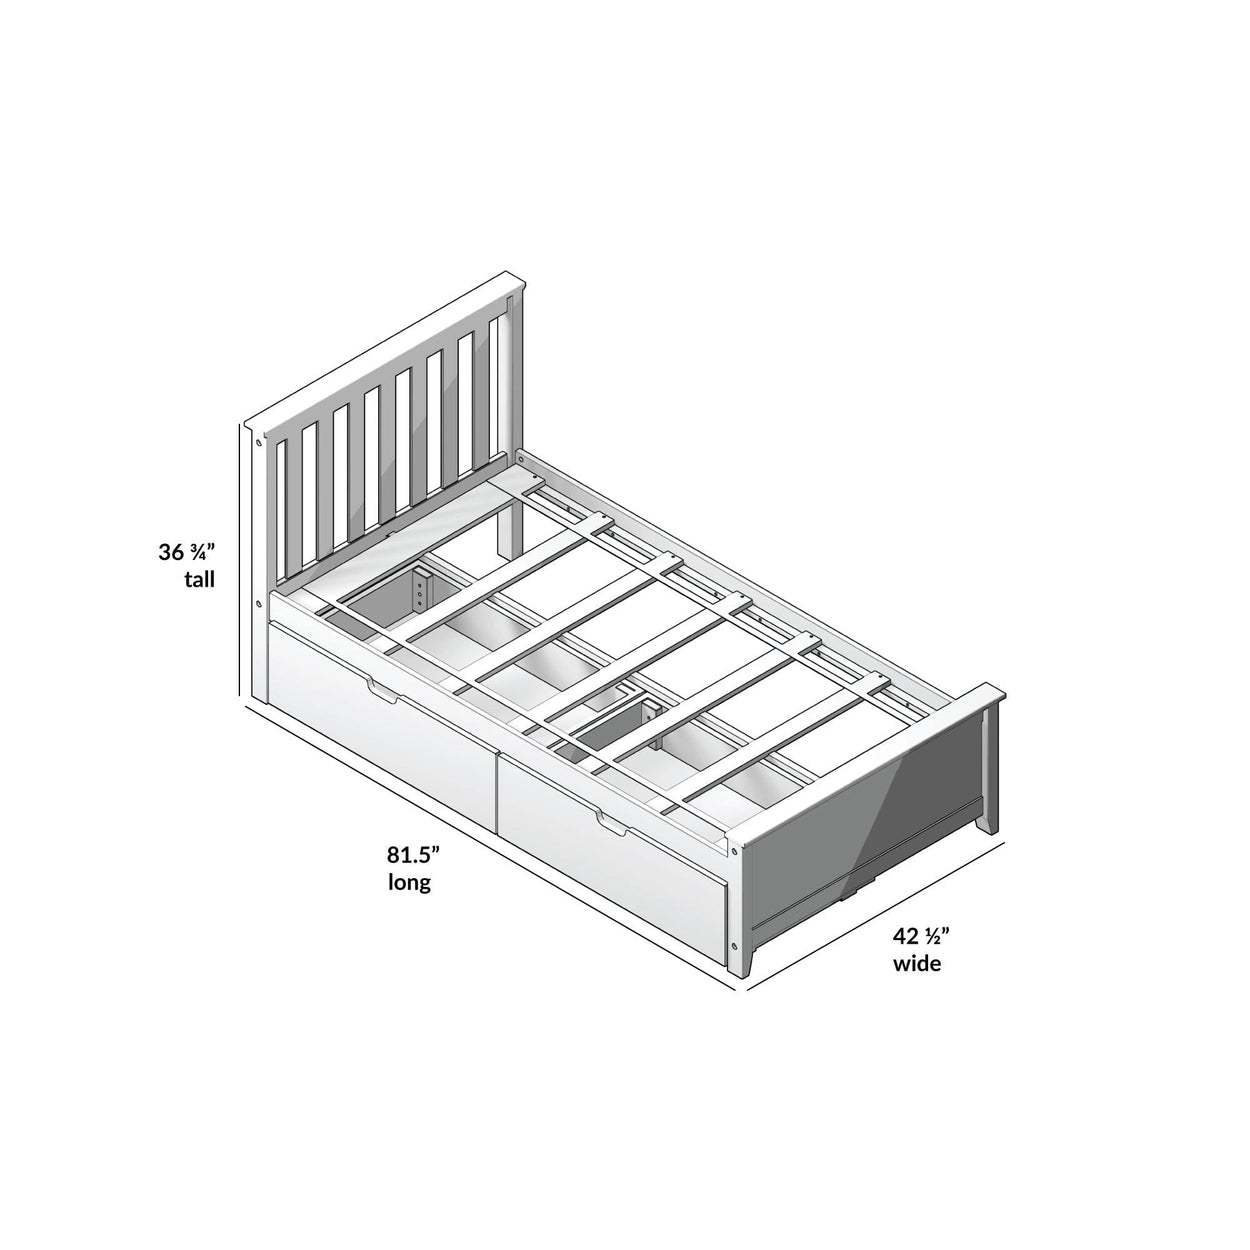 187210-005 : Kids Beds Twin-Size Platform Bed with Underbed Storage Drawers, Espresso